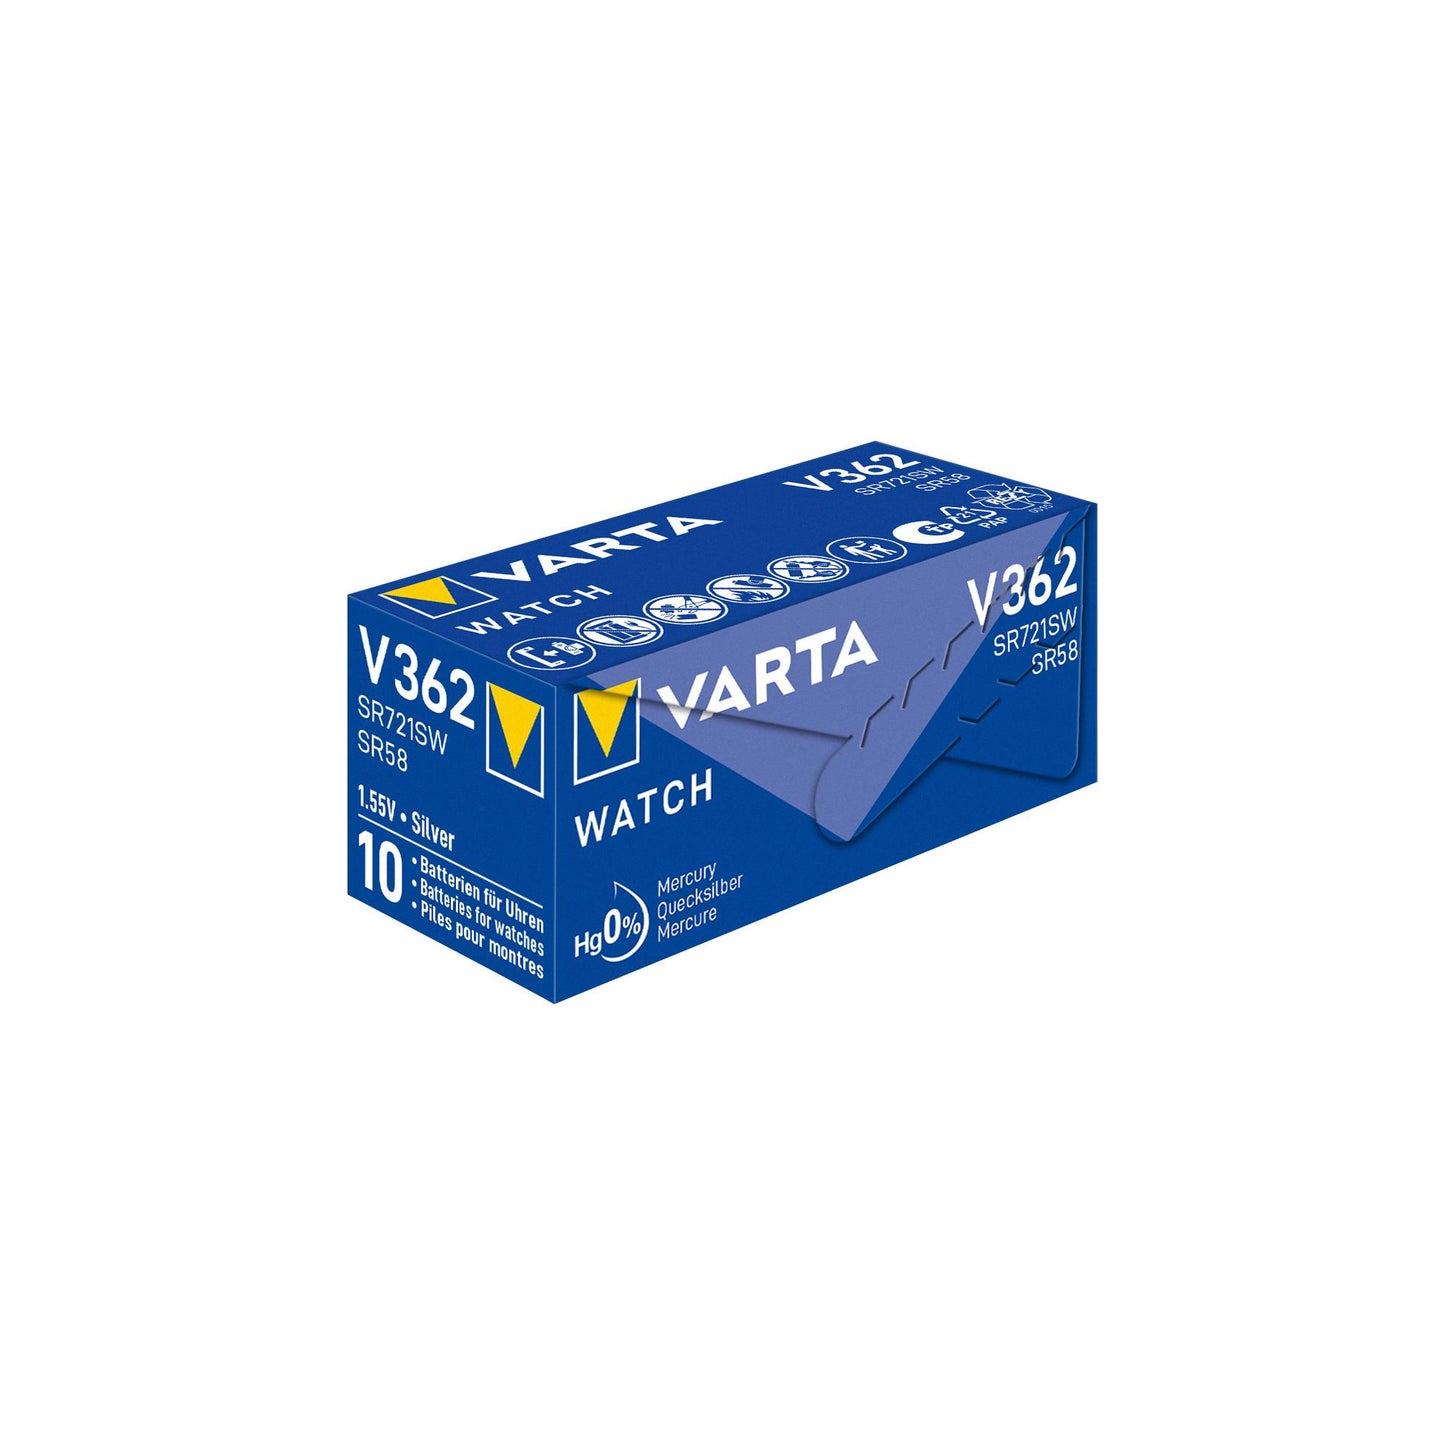 VARTA Batterie Silver Oxide Knopfzelle 362, SR58, 1.55V Watch, Retail (10-Pack)